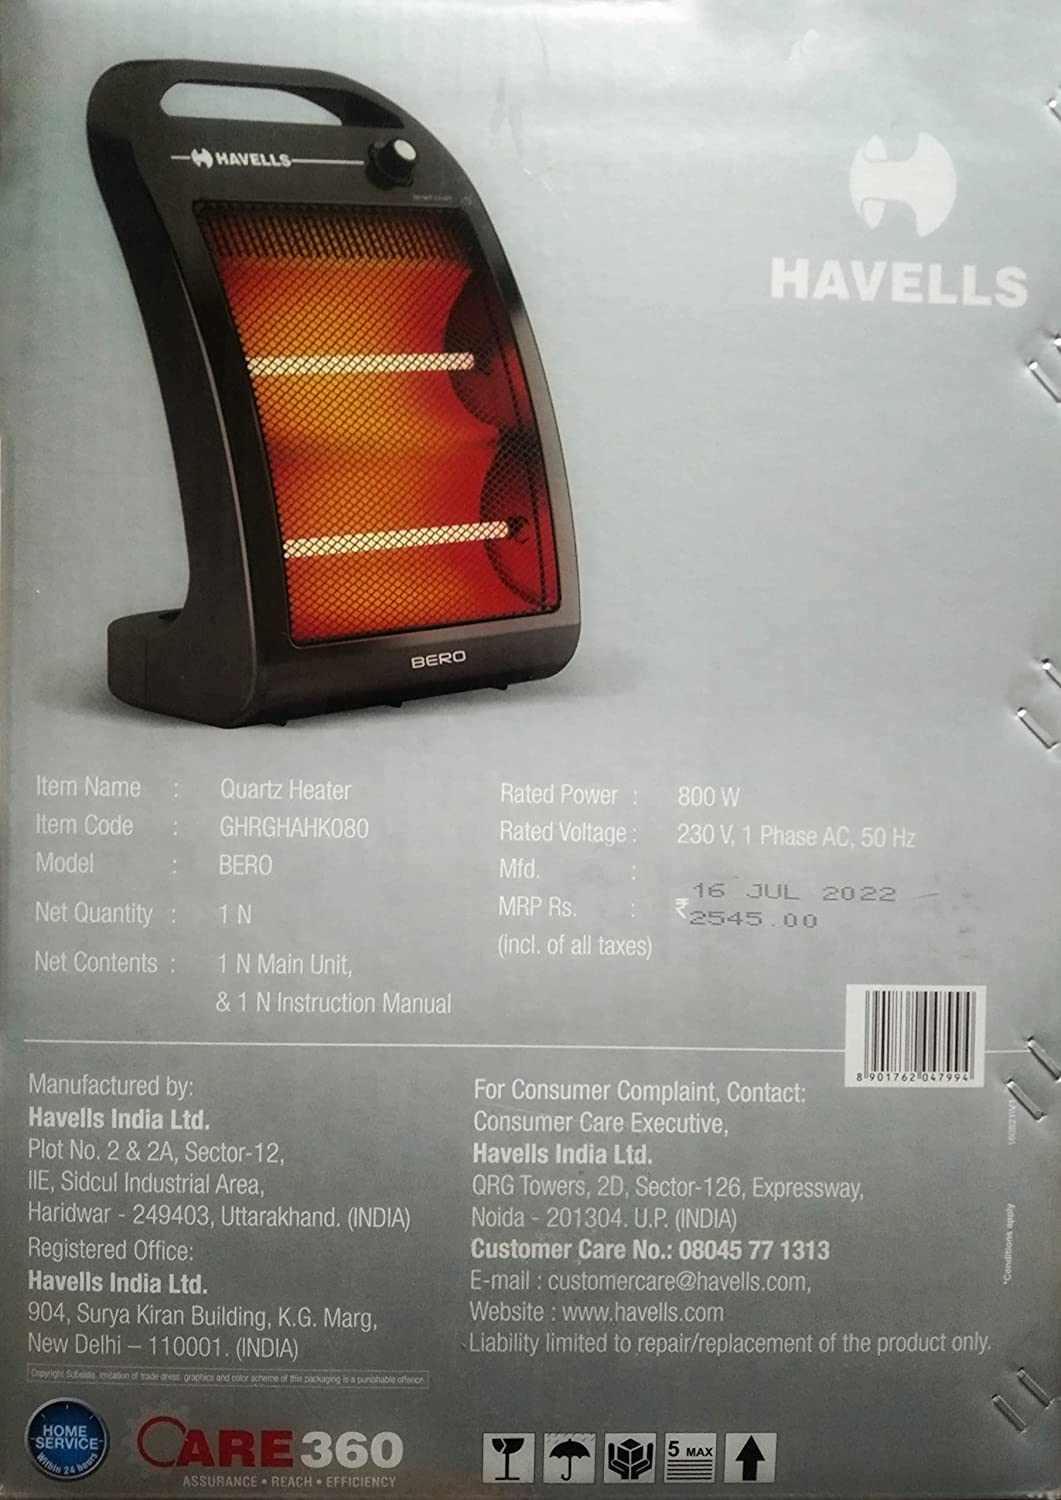 Havells Bero Quartz Heater Black 800w 2 Heat Settings 2 Year Product Warranty GHRGHAHK080 - Mahajan Electronics Online